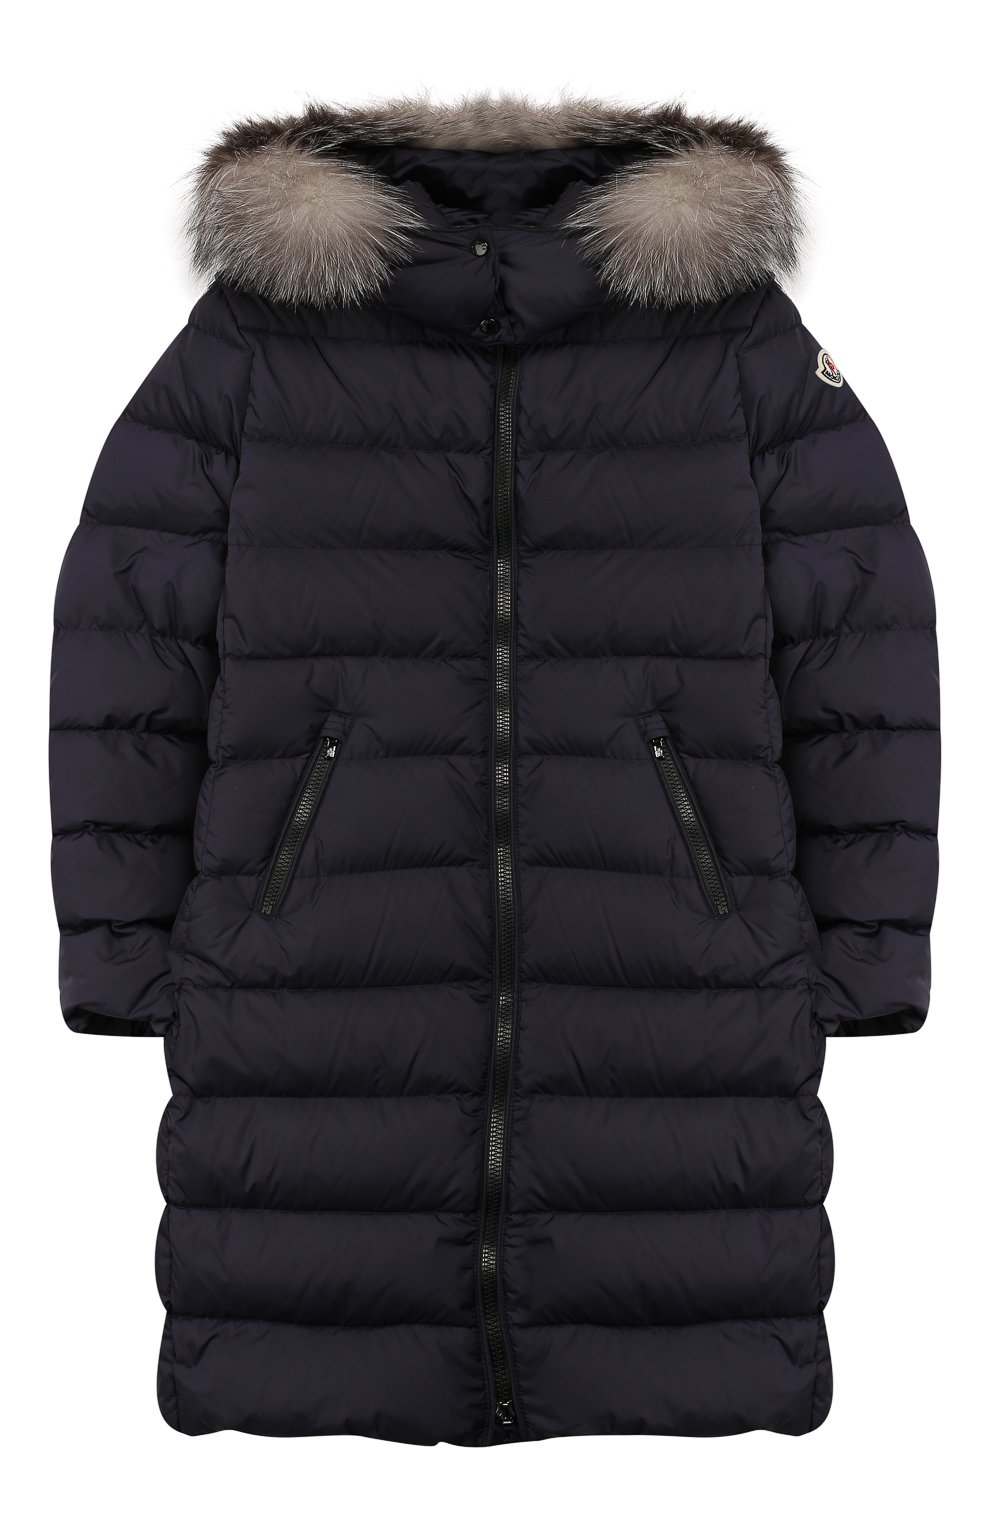 Пуховое пальто с капюшоном Moncler Enfant